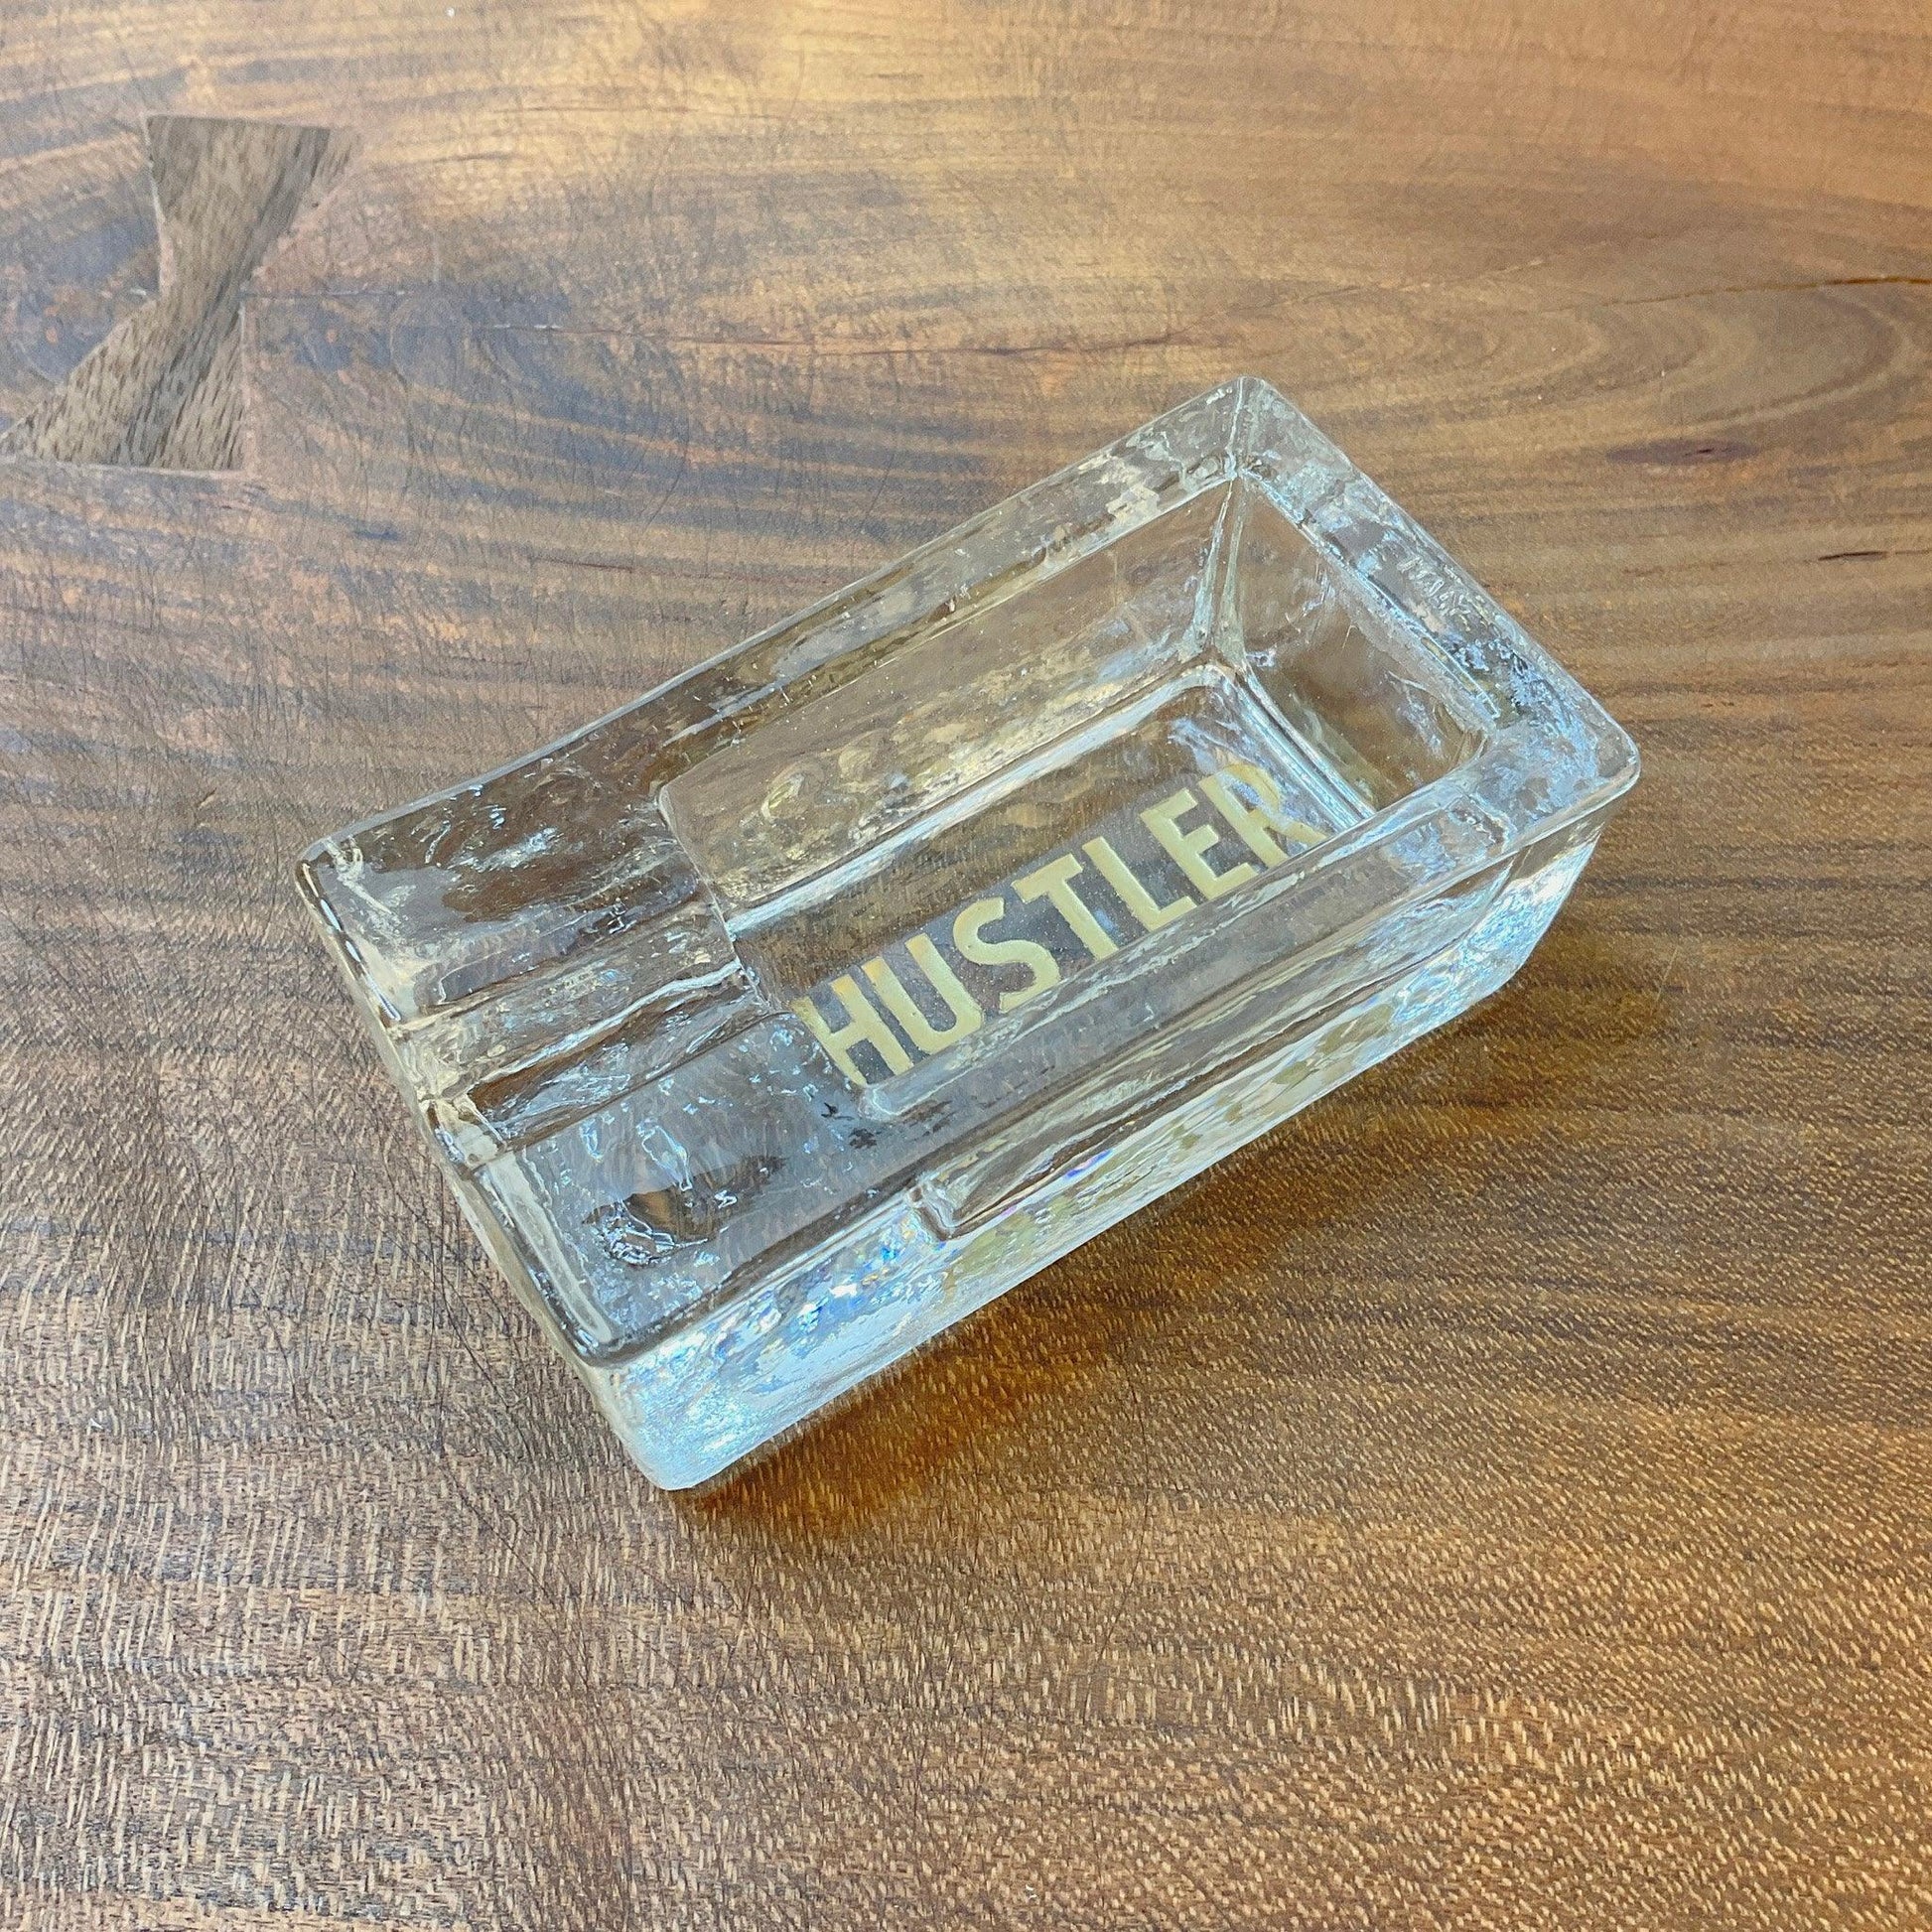 Hustler Ashtray - Offensively Domestic